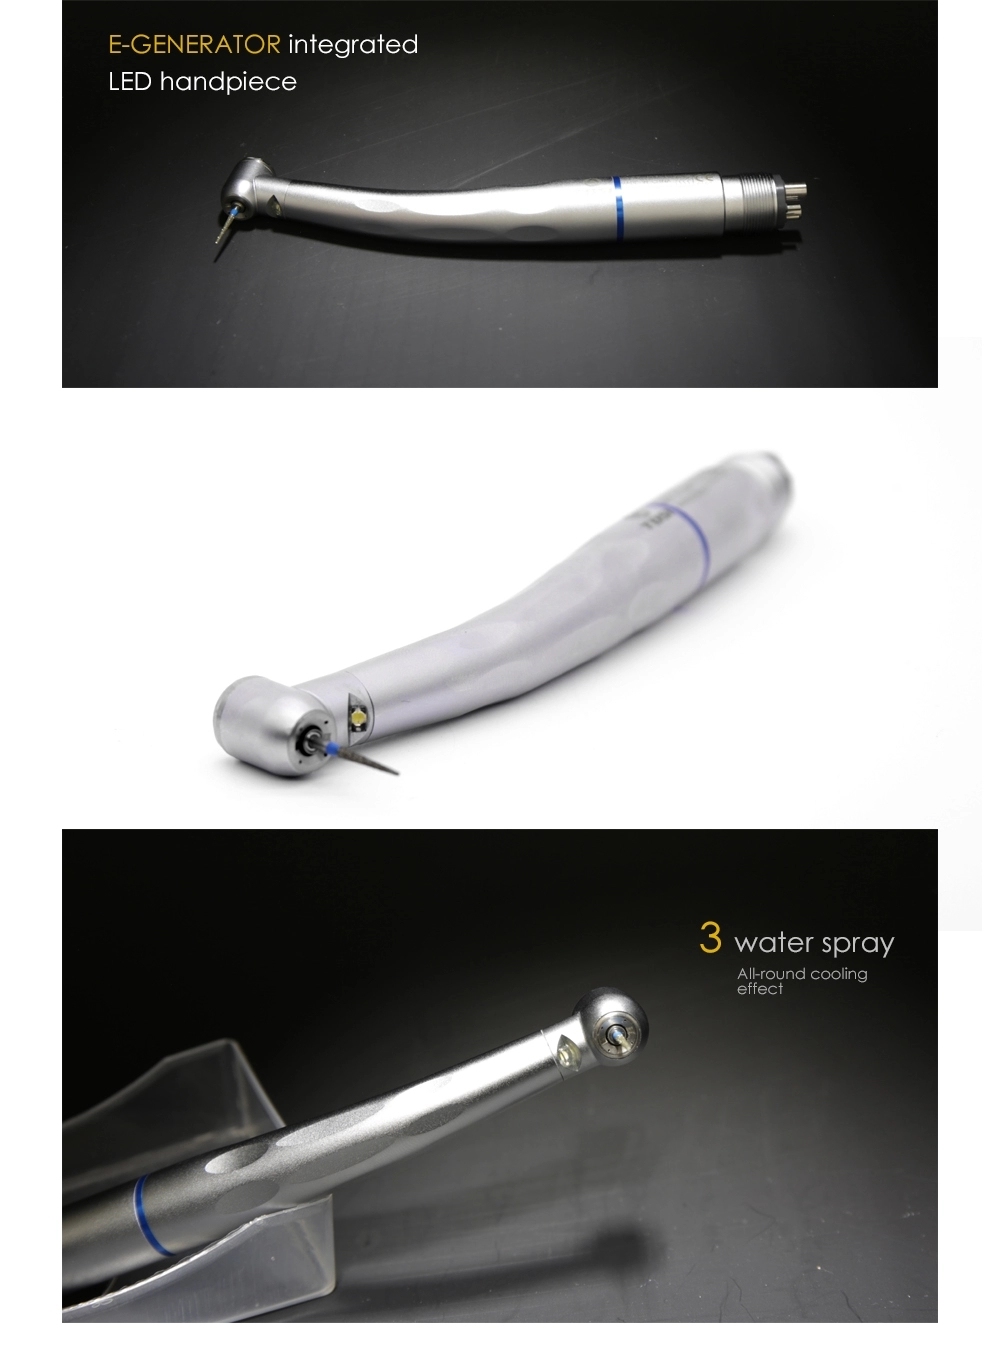 New Product High Speed Air Turbine Dental Handpiece LED Dental Handpiece